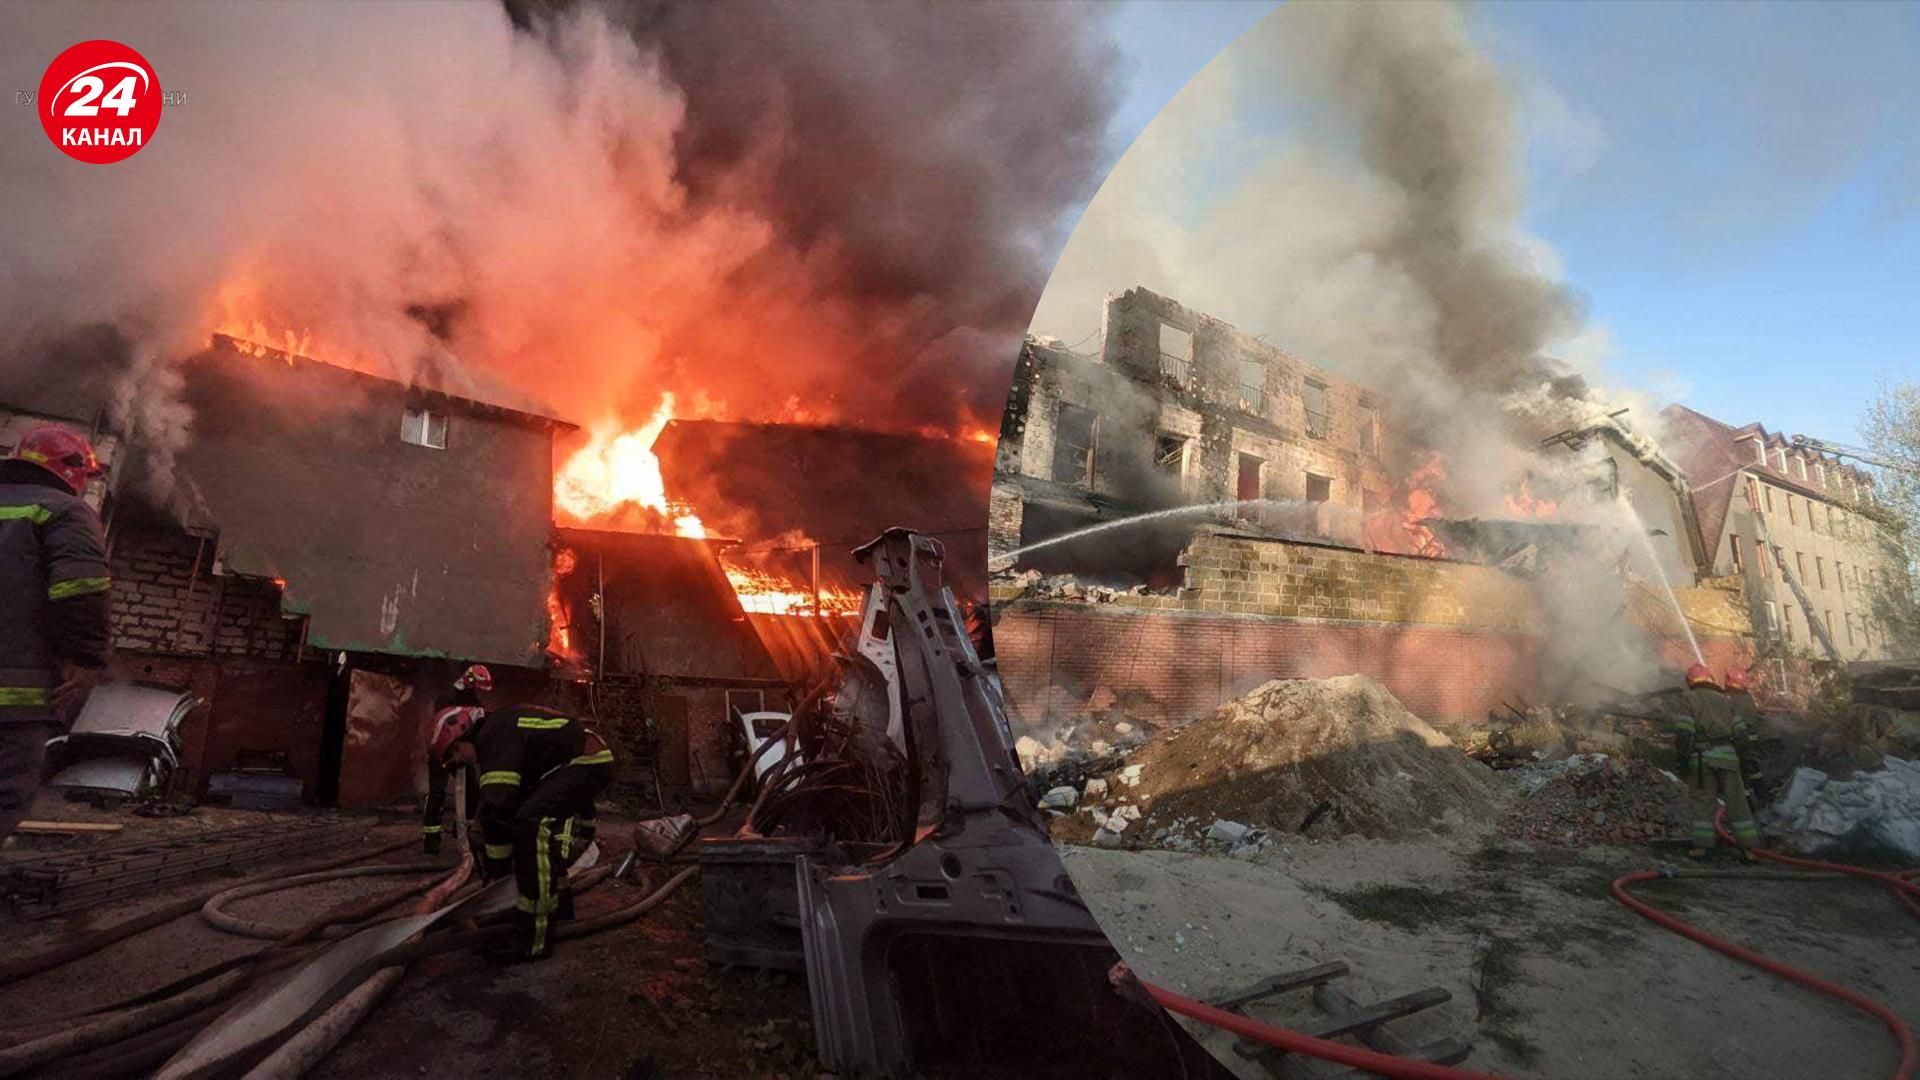 У Києві сталася масштабна пожежа у готелі "Влада": фото займання